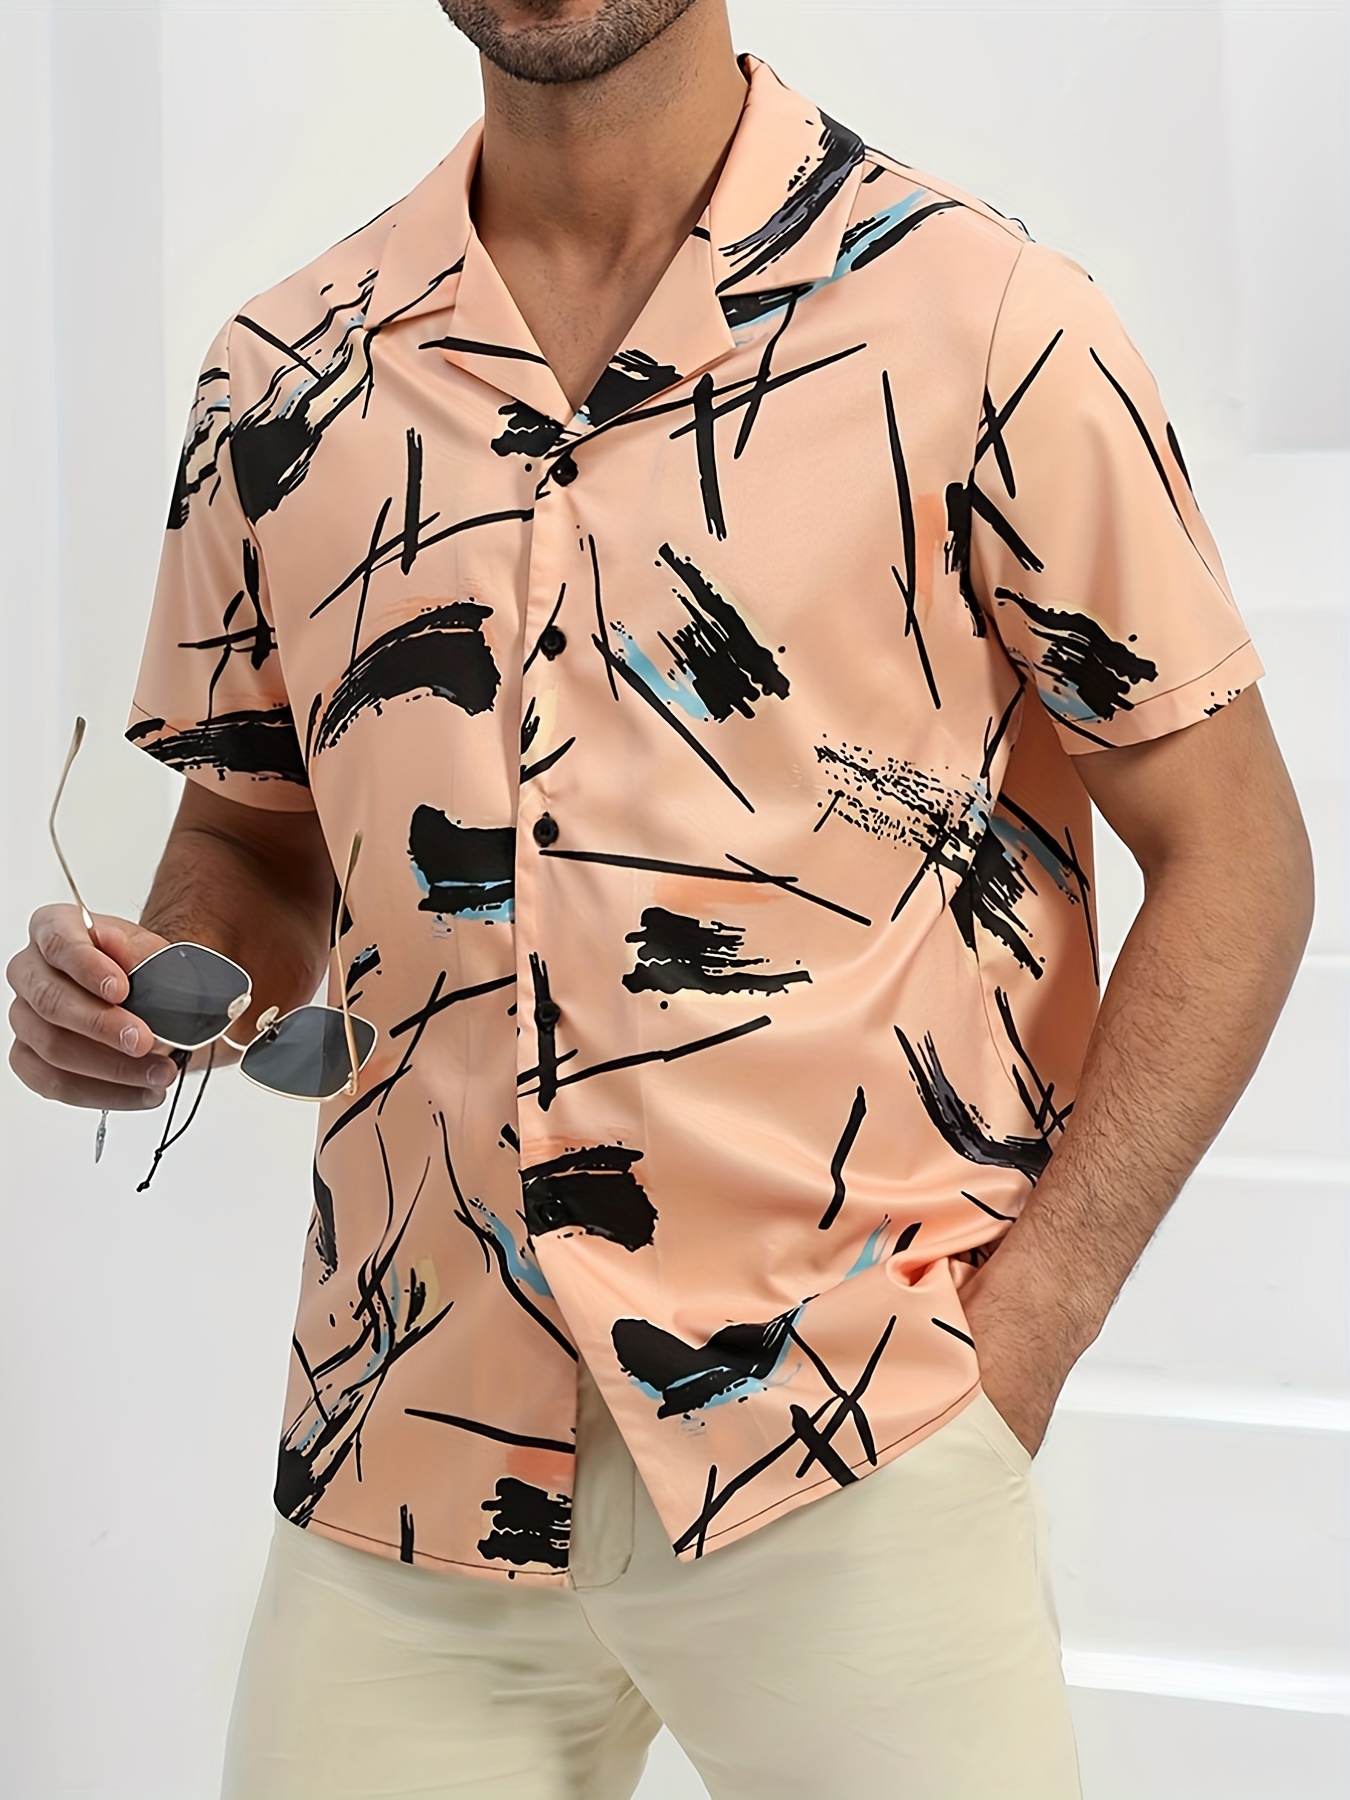 Tiger Shirts Men Fashion Shirt Long Sleeve Hawaiian Shirts Cuba